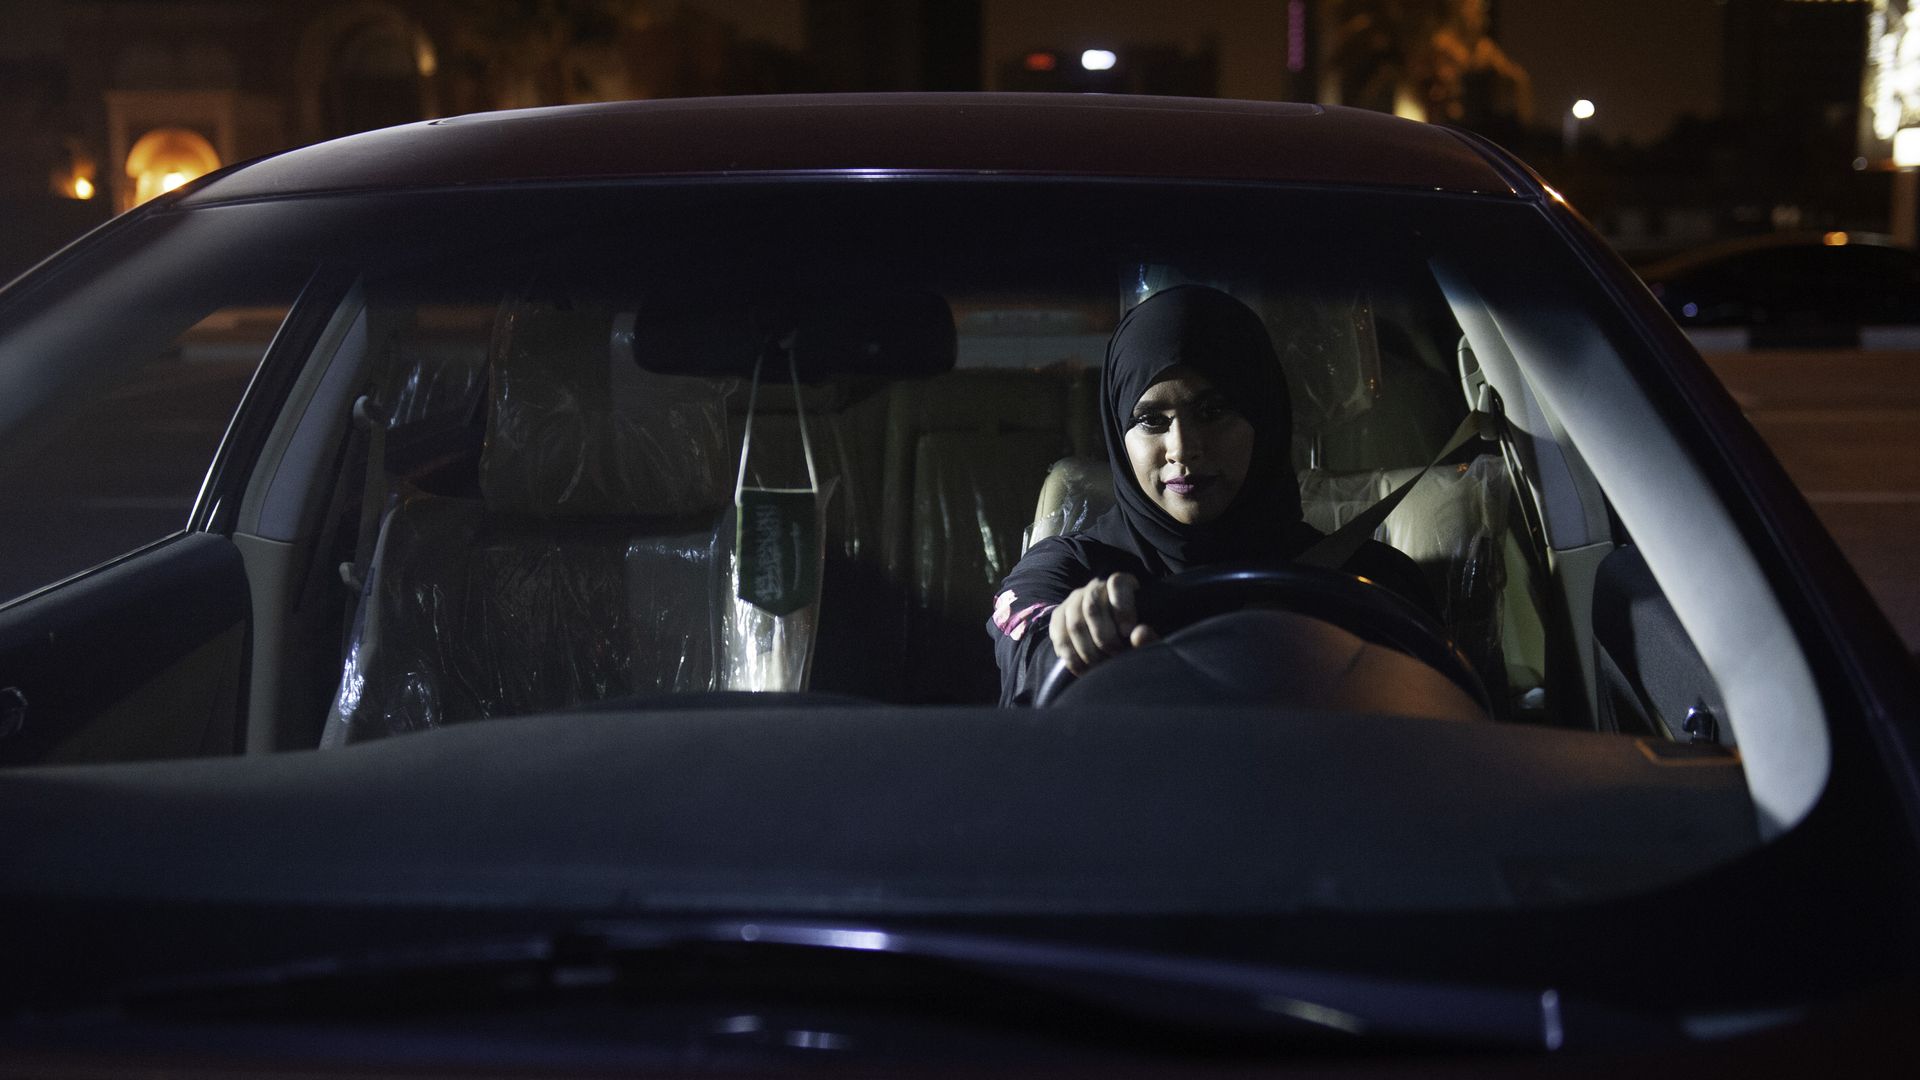 Saudi Arabian woman driving. 